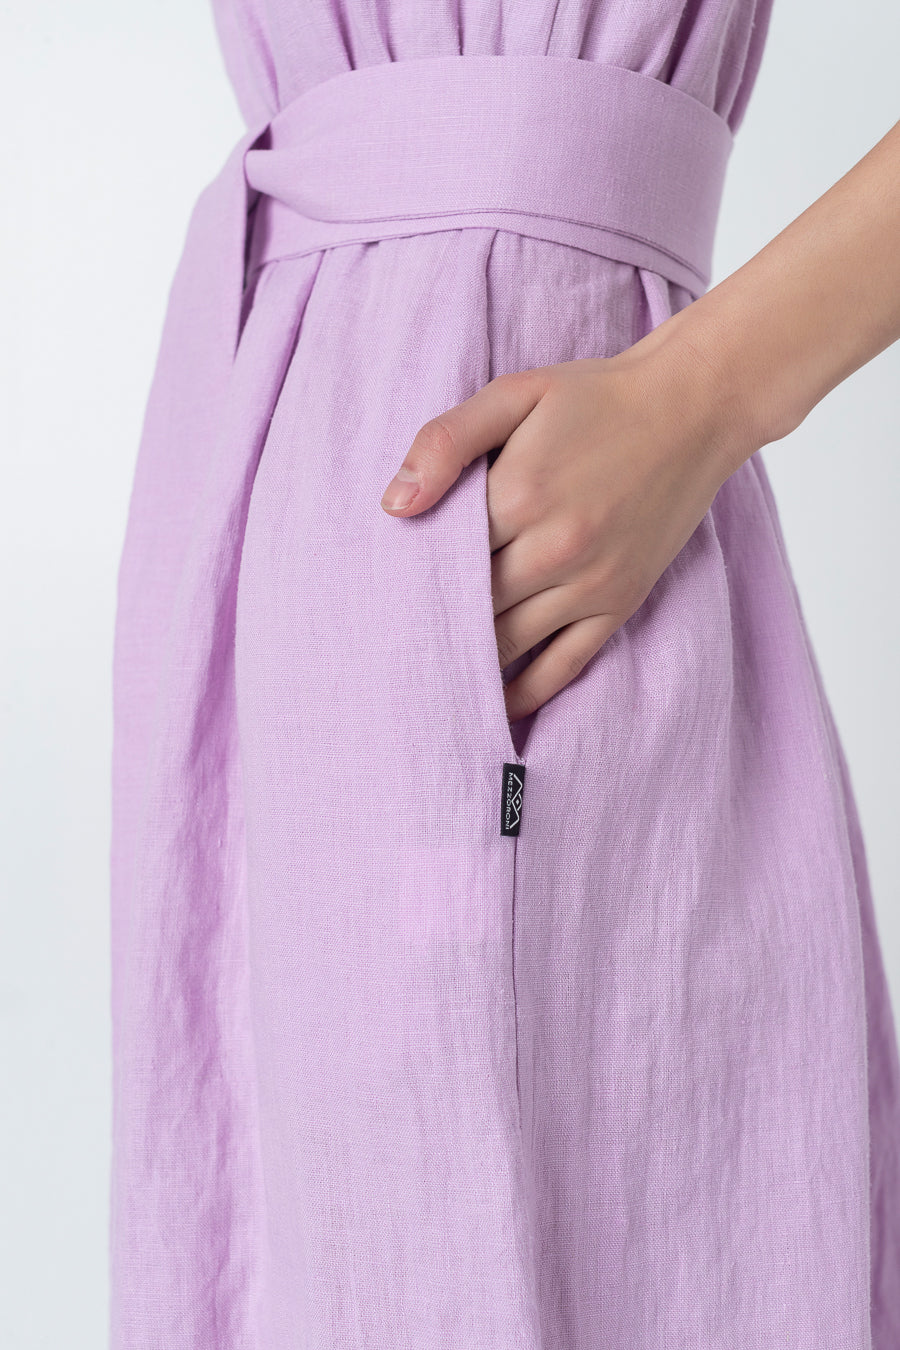 SOTIRA | Short sleeve linen dress - Mezzoroni